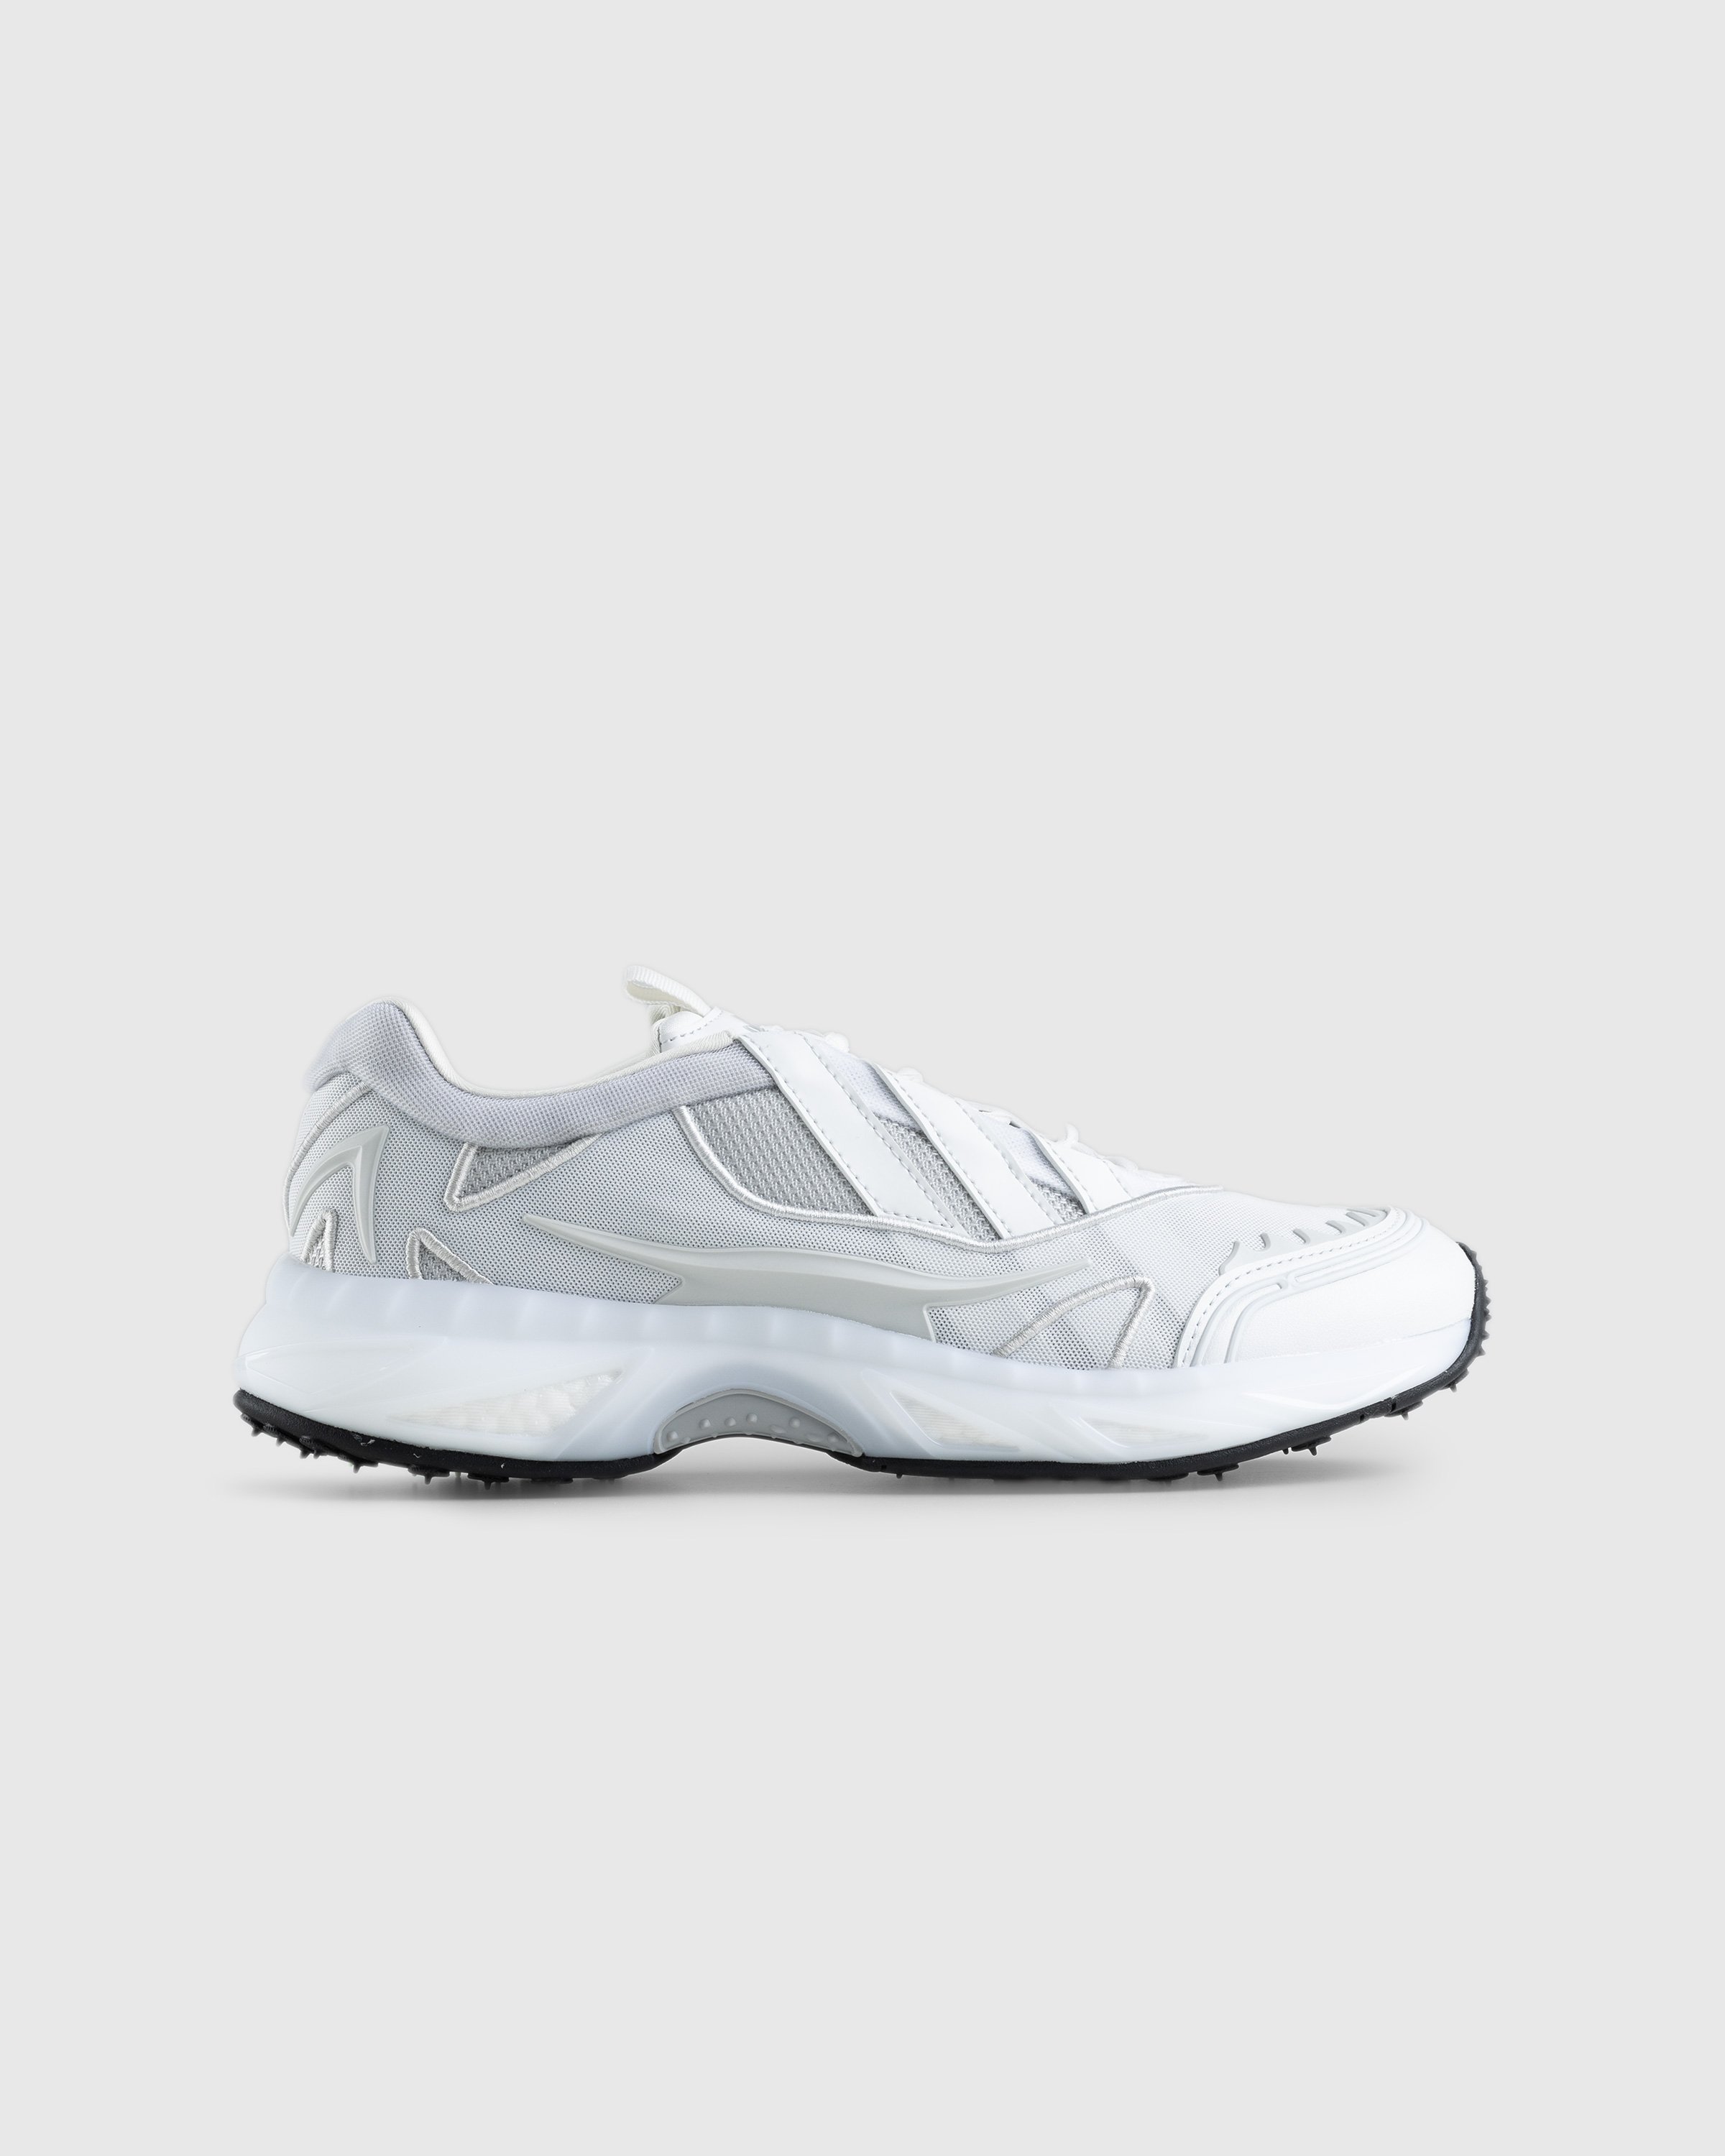 Adidas - Xare Boost White - Footwear - White - Image 1